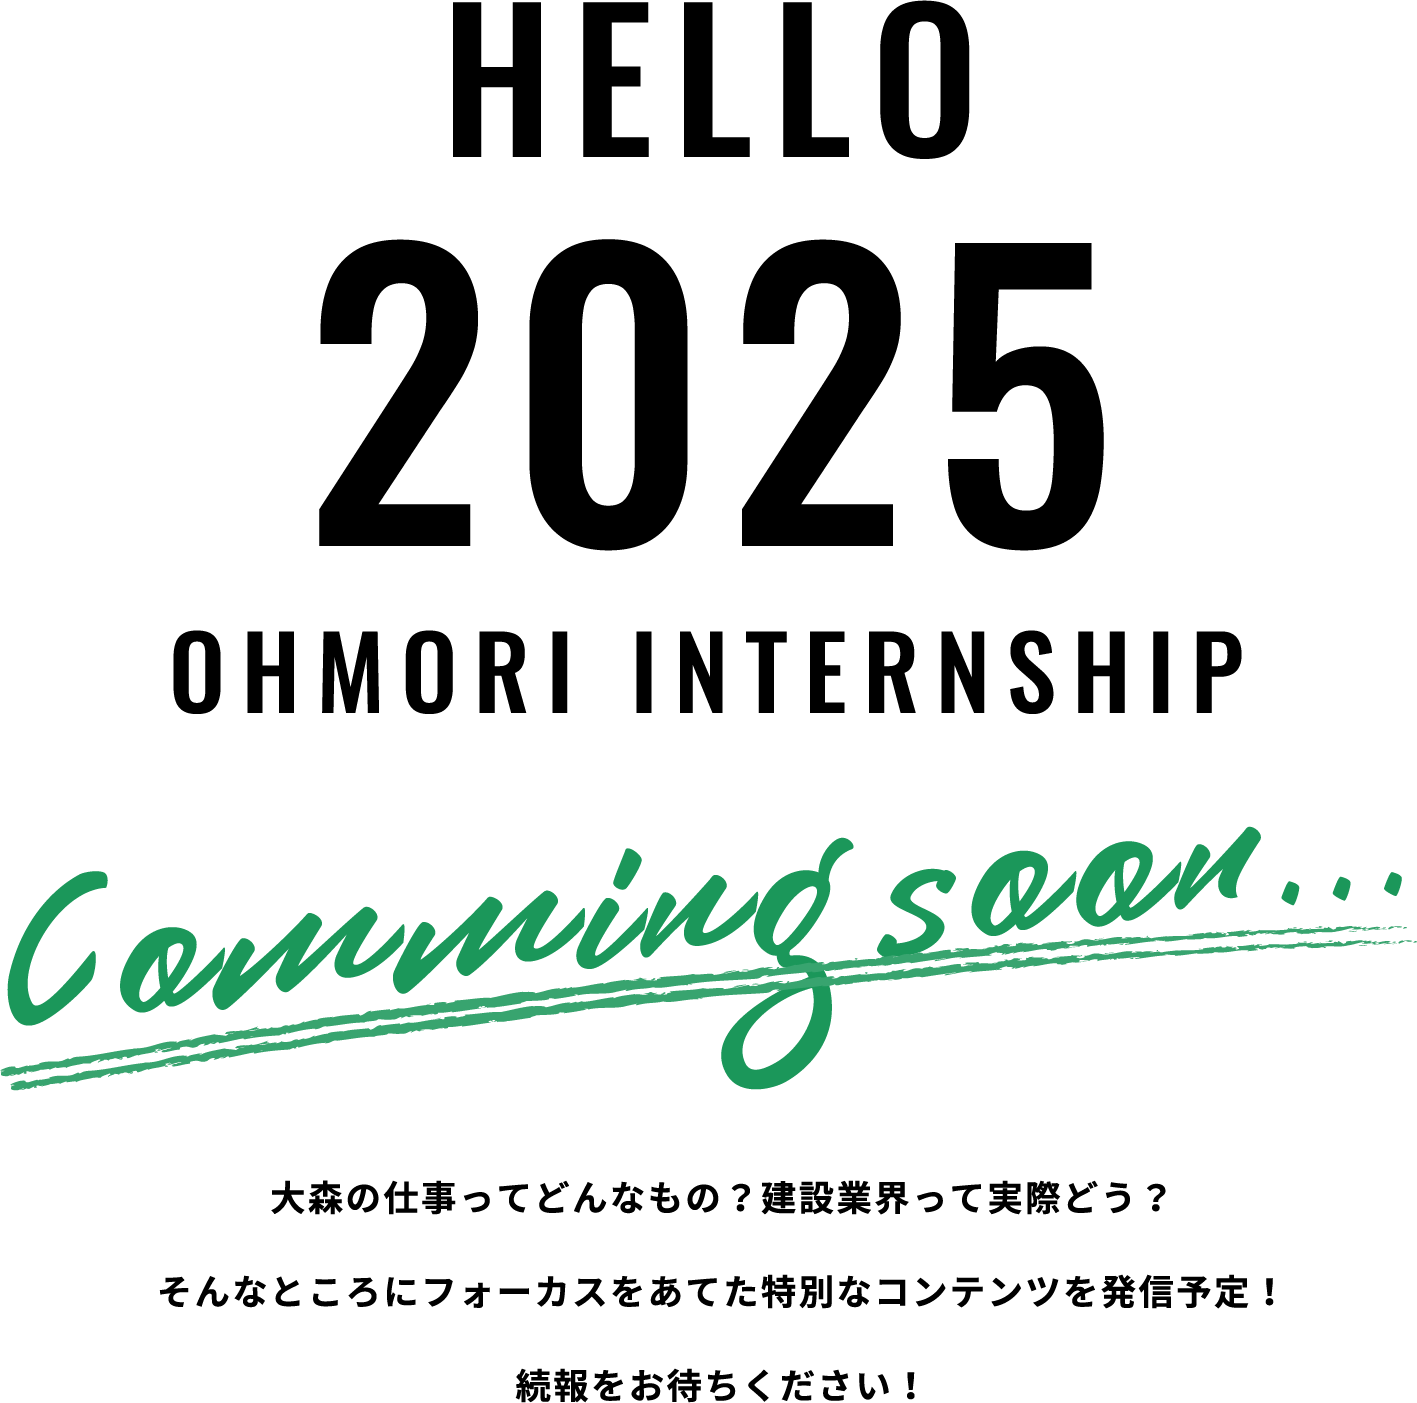 HELLO 2024 OHMORI INTERNSHIP